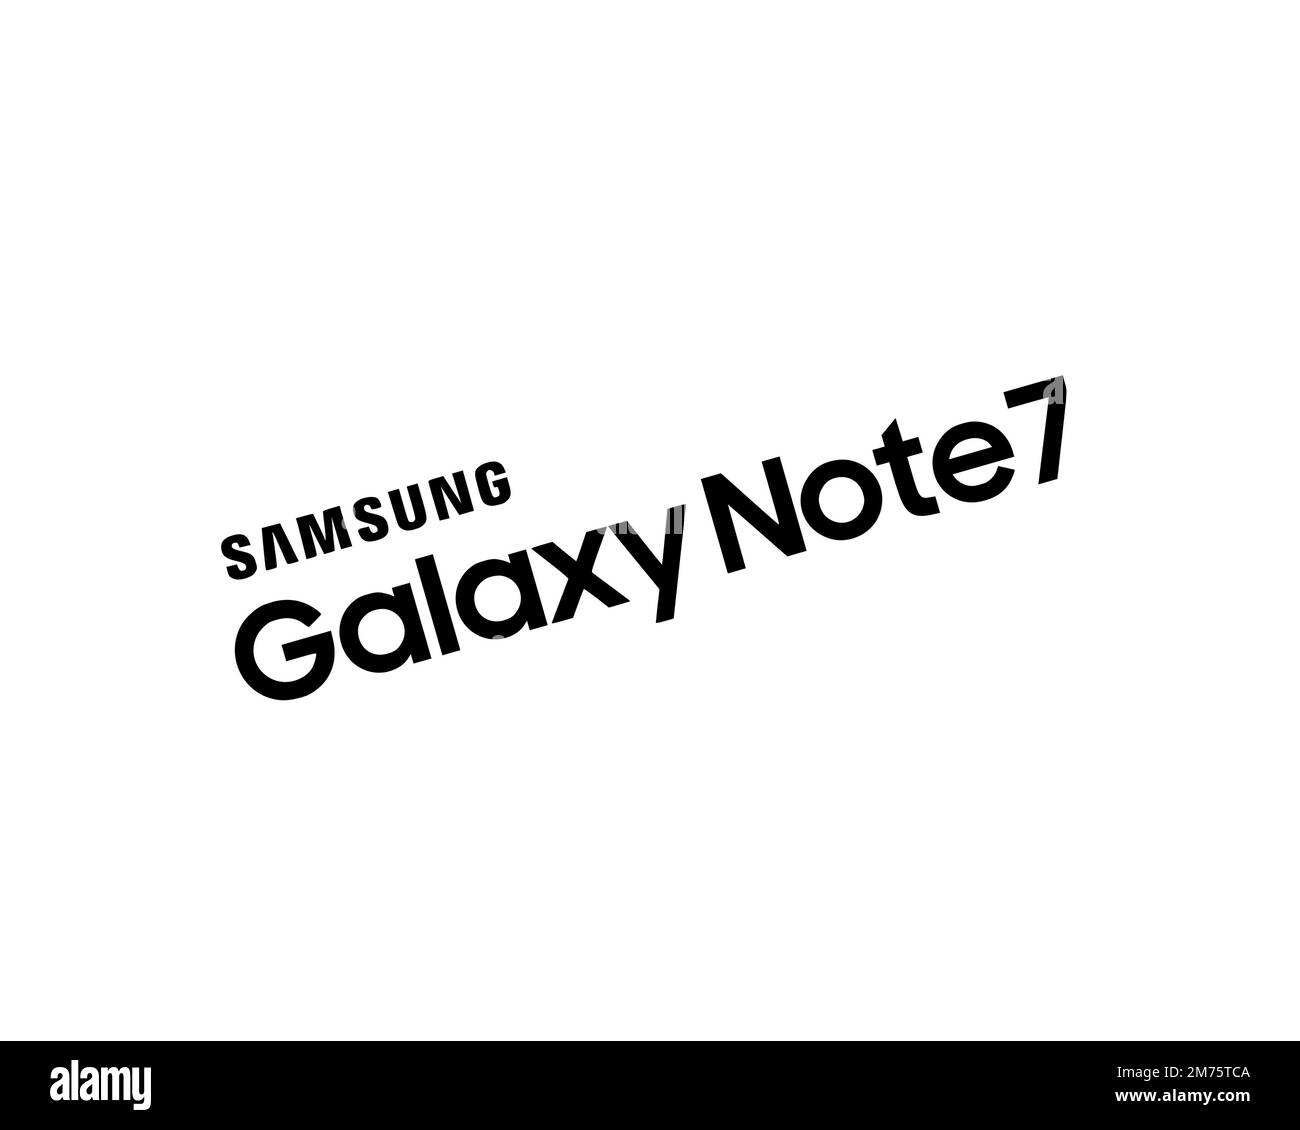 Samsung Galaxy Note 7, rotated logo, white background Stock Photo